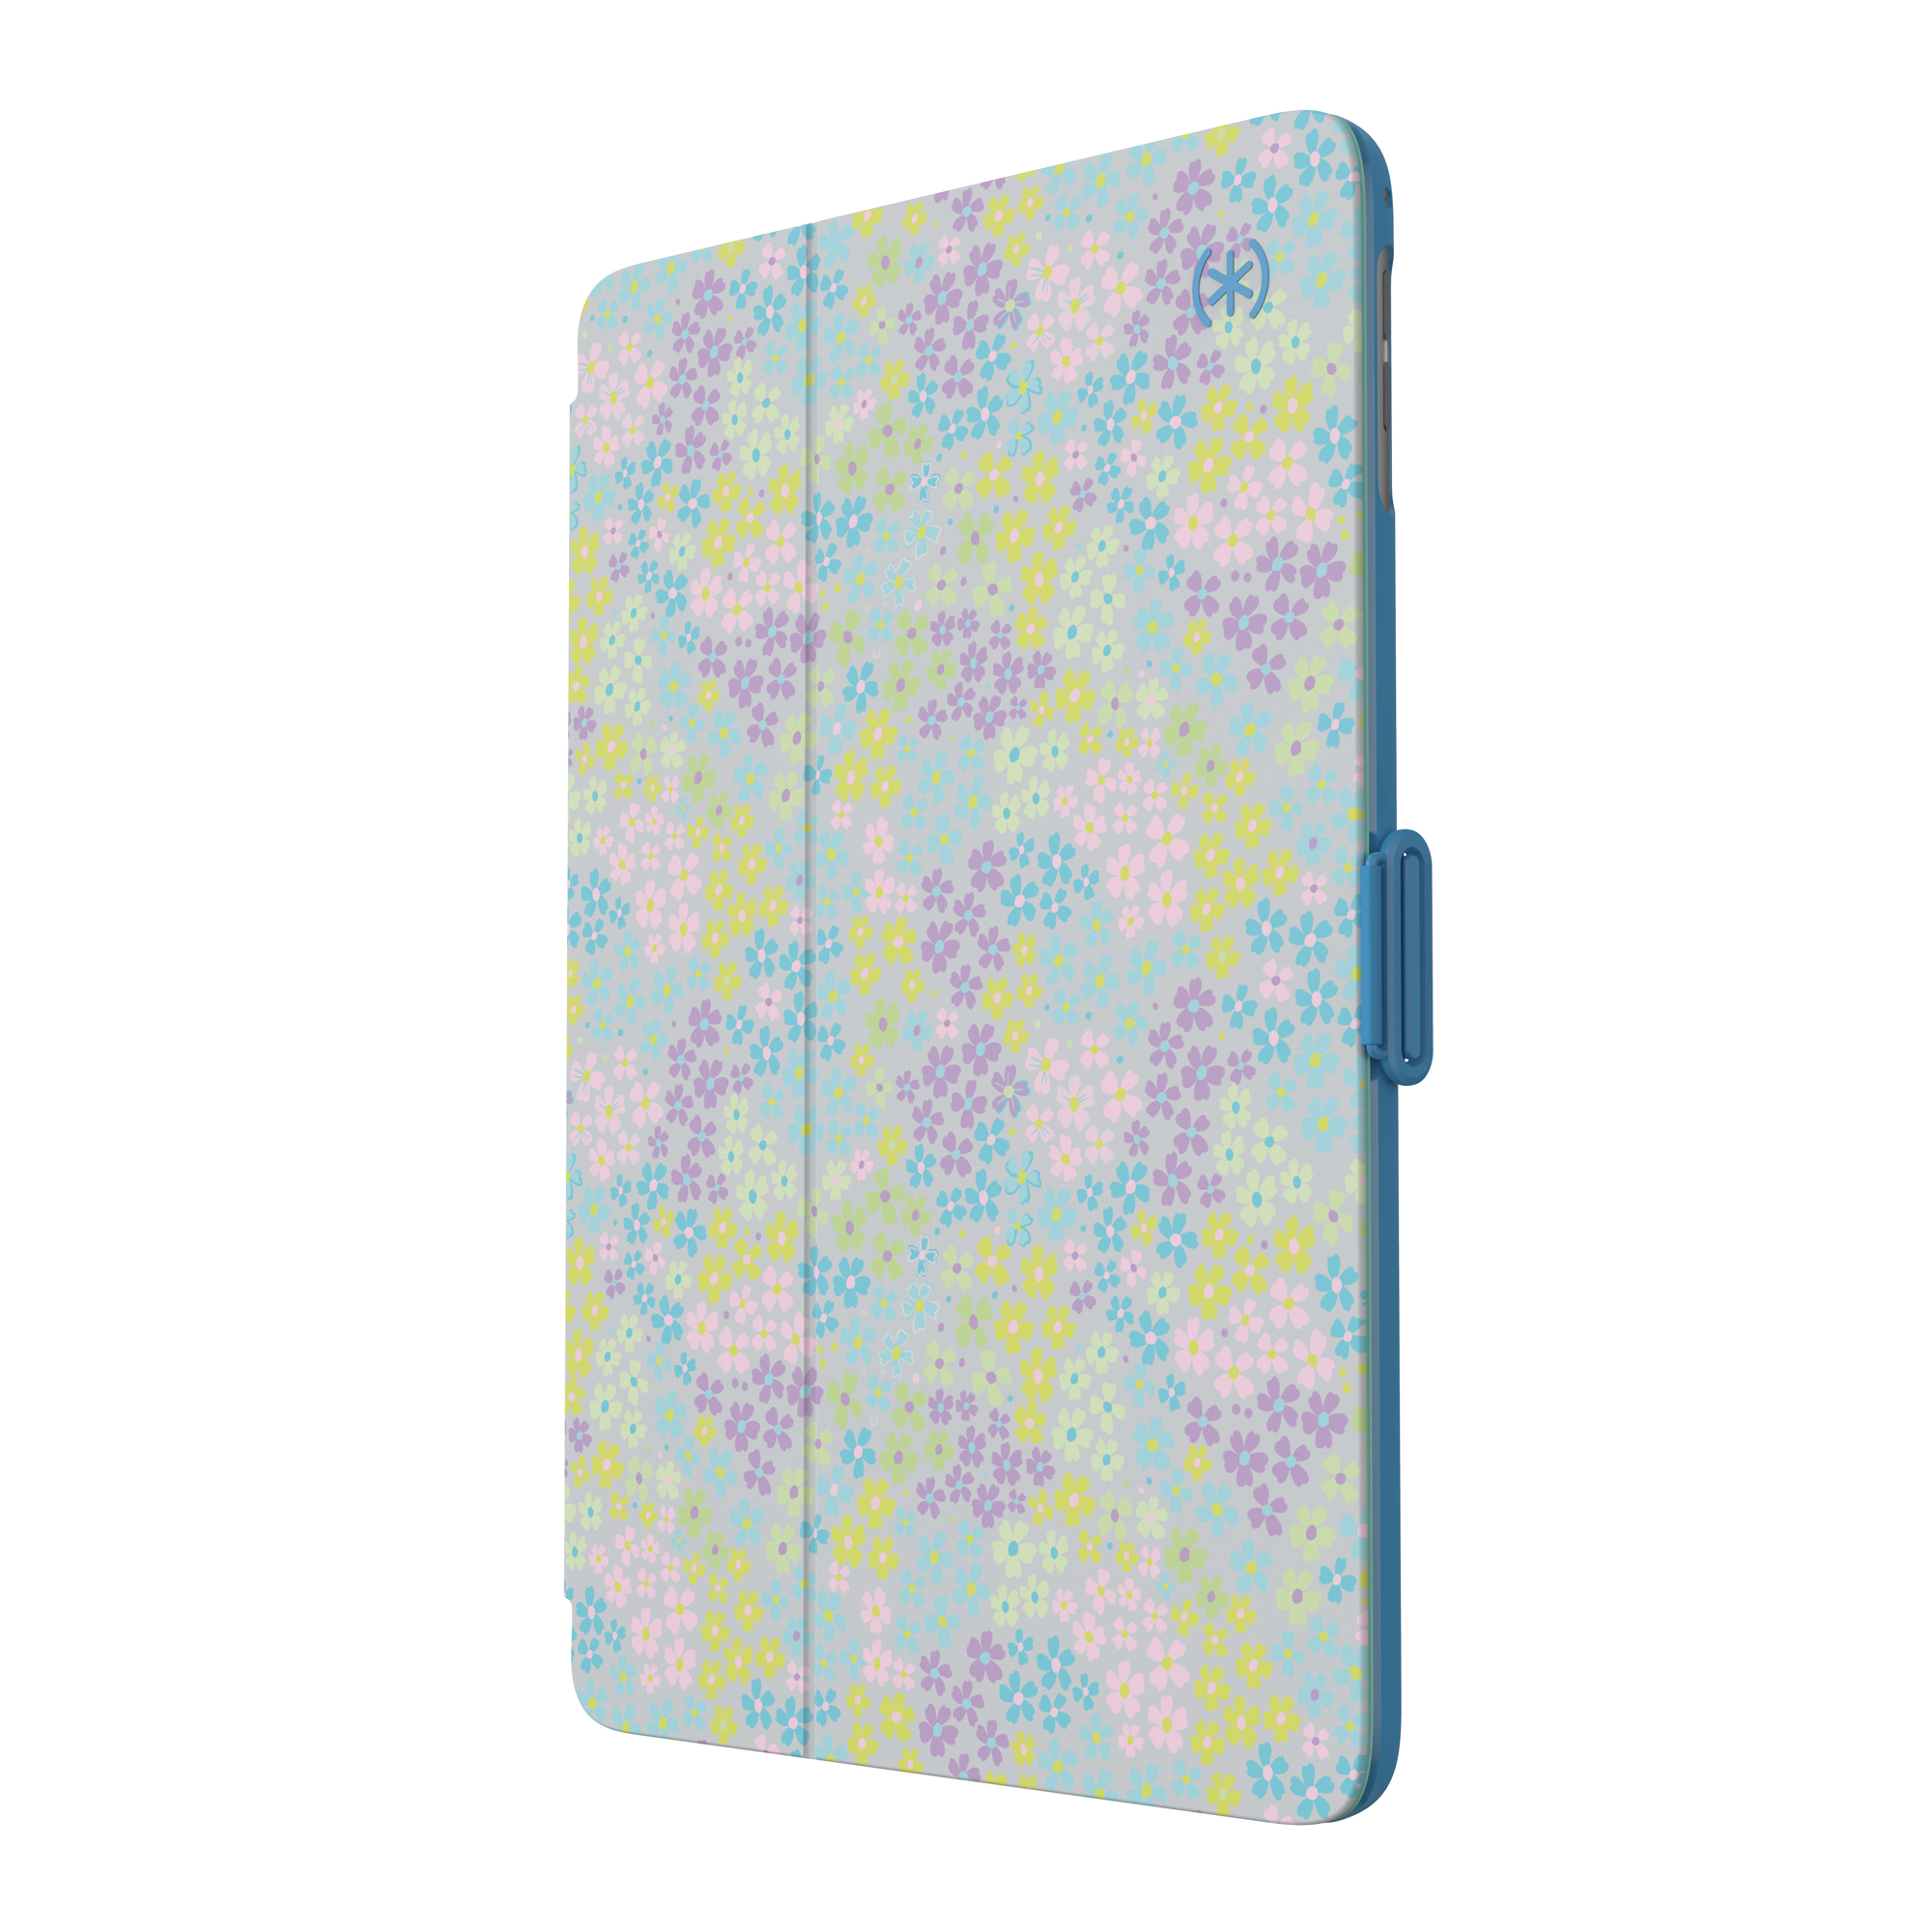 Speck 9.7 " iPad Air 2 Folio Case, Flower Print Aster Purple & Blue - image 3 of 7